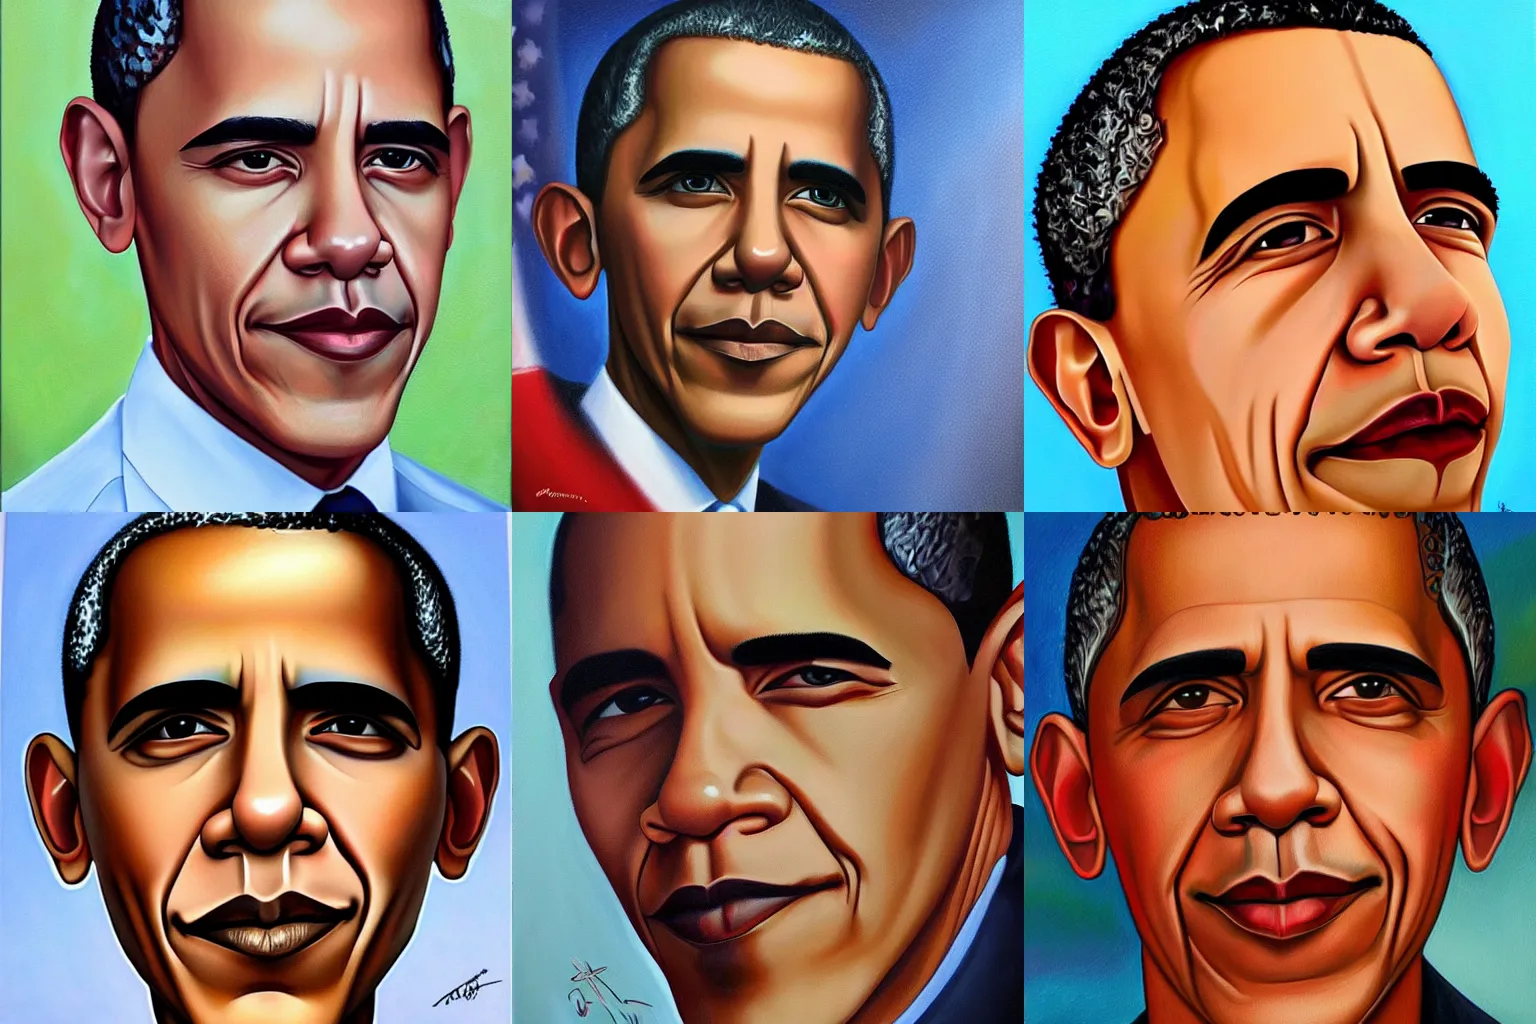 Prompt: a stunning portrait of barack obama, artwork by aaron jasinski